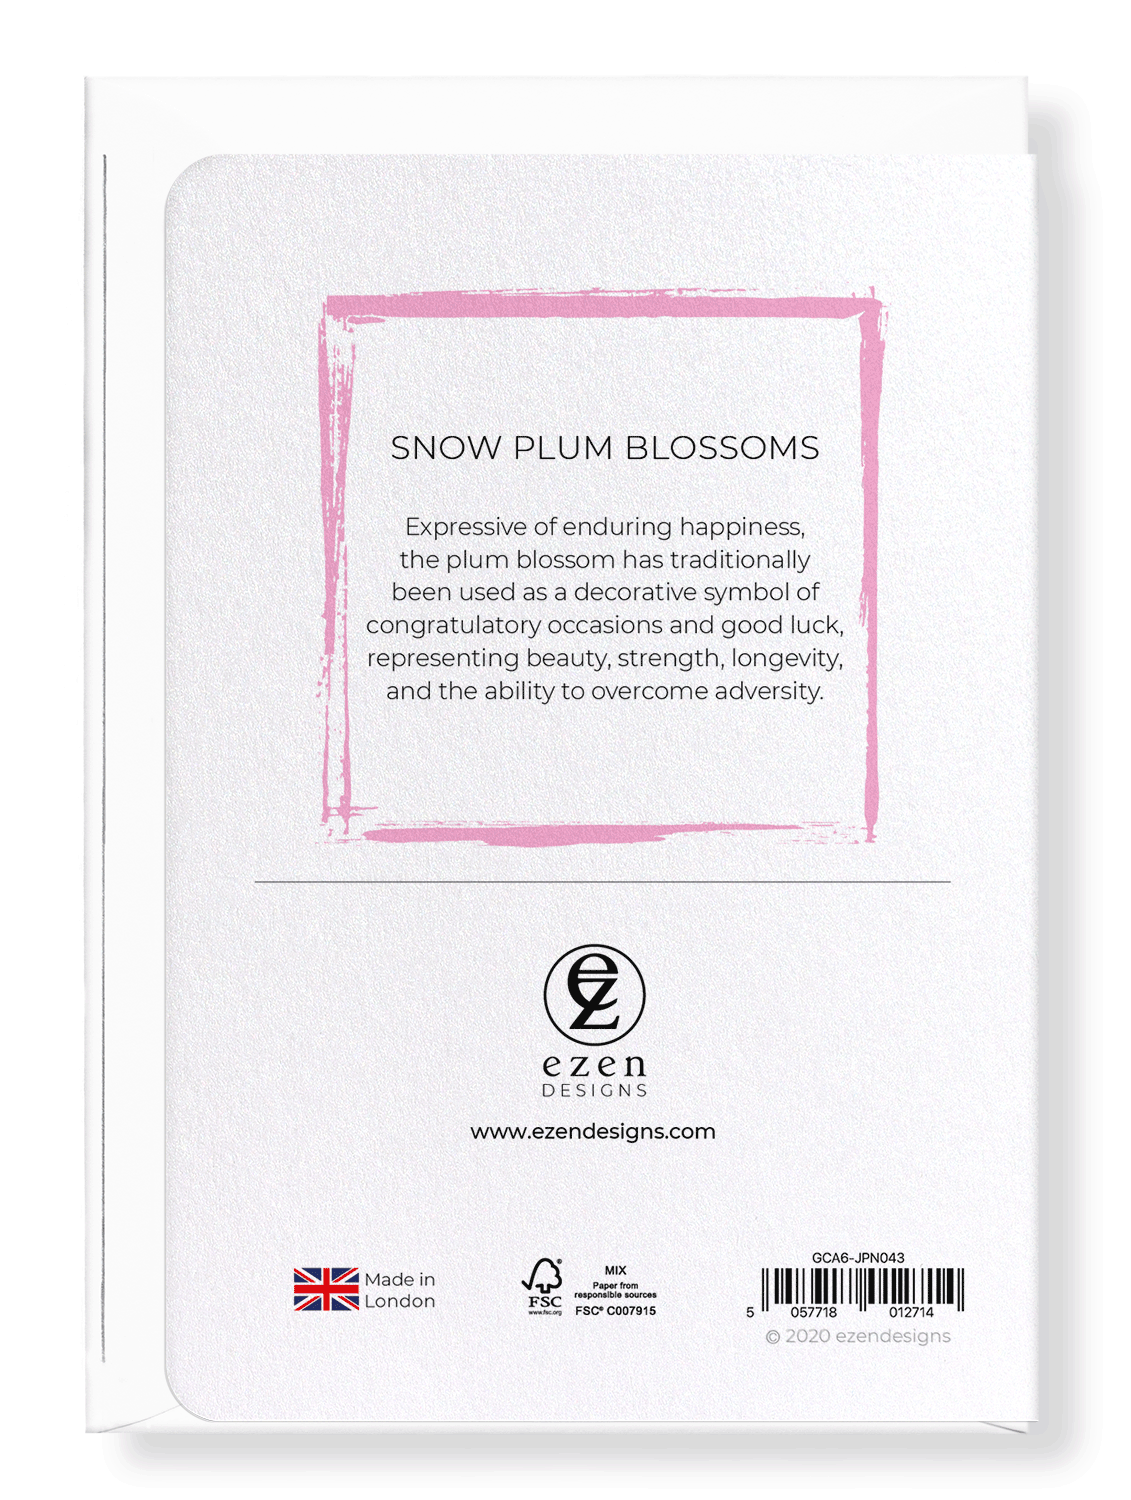 Ezen Designs - Snow plum blossoms - Greeting Card - Back